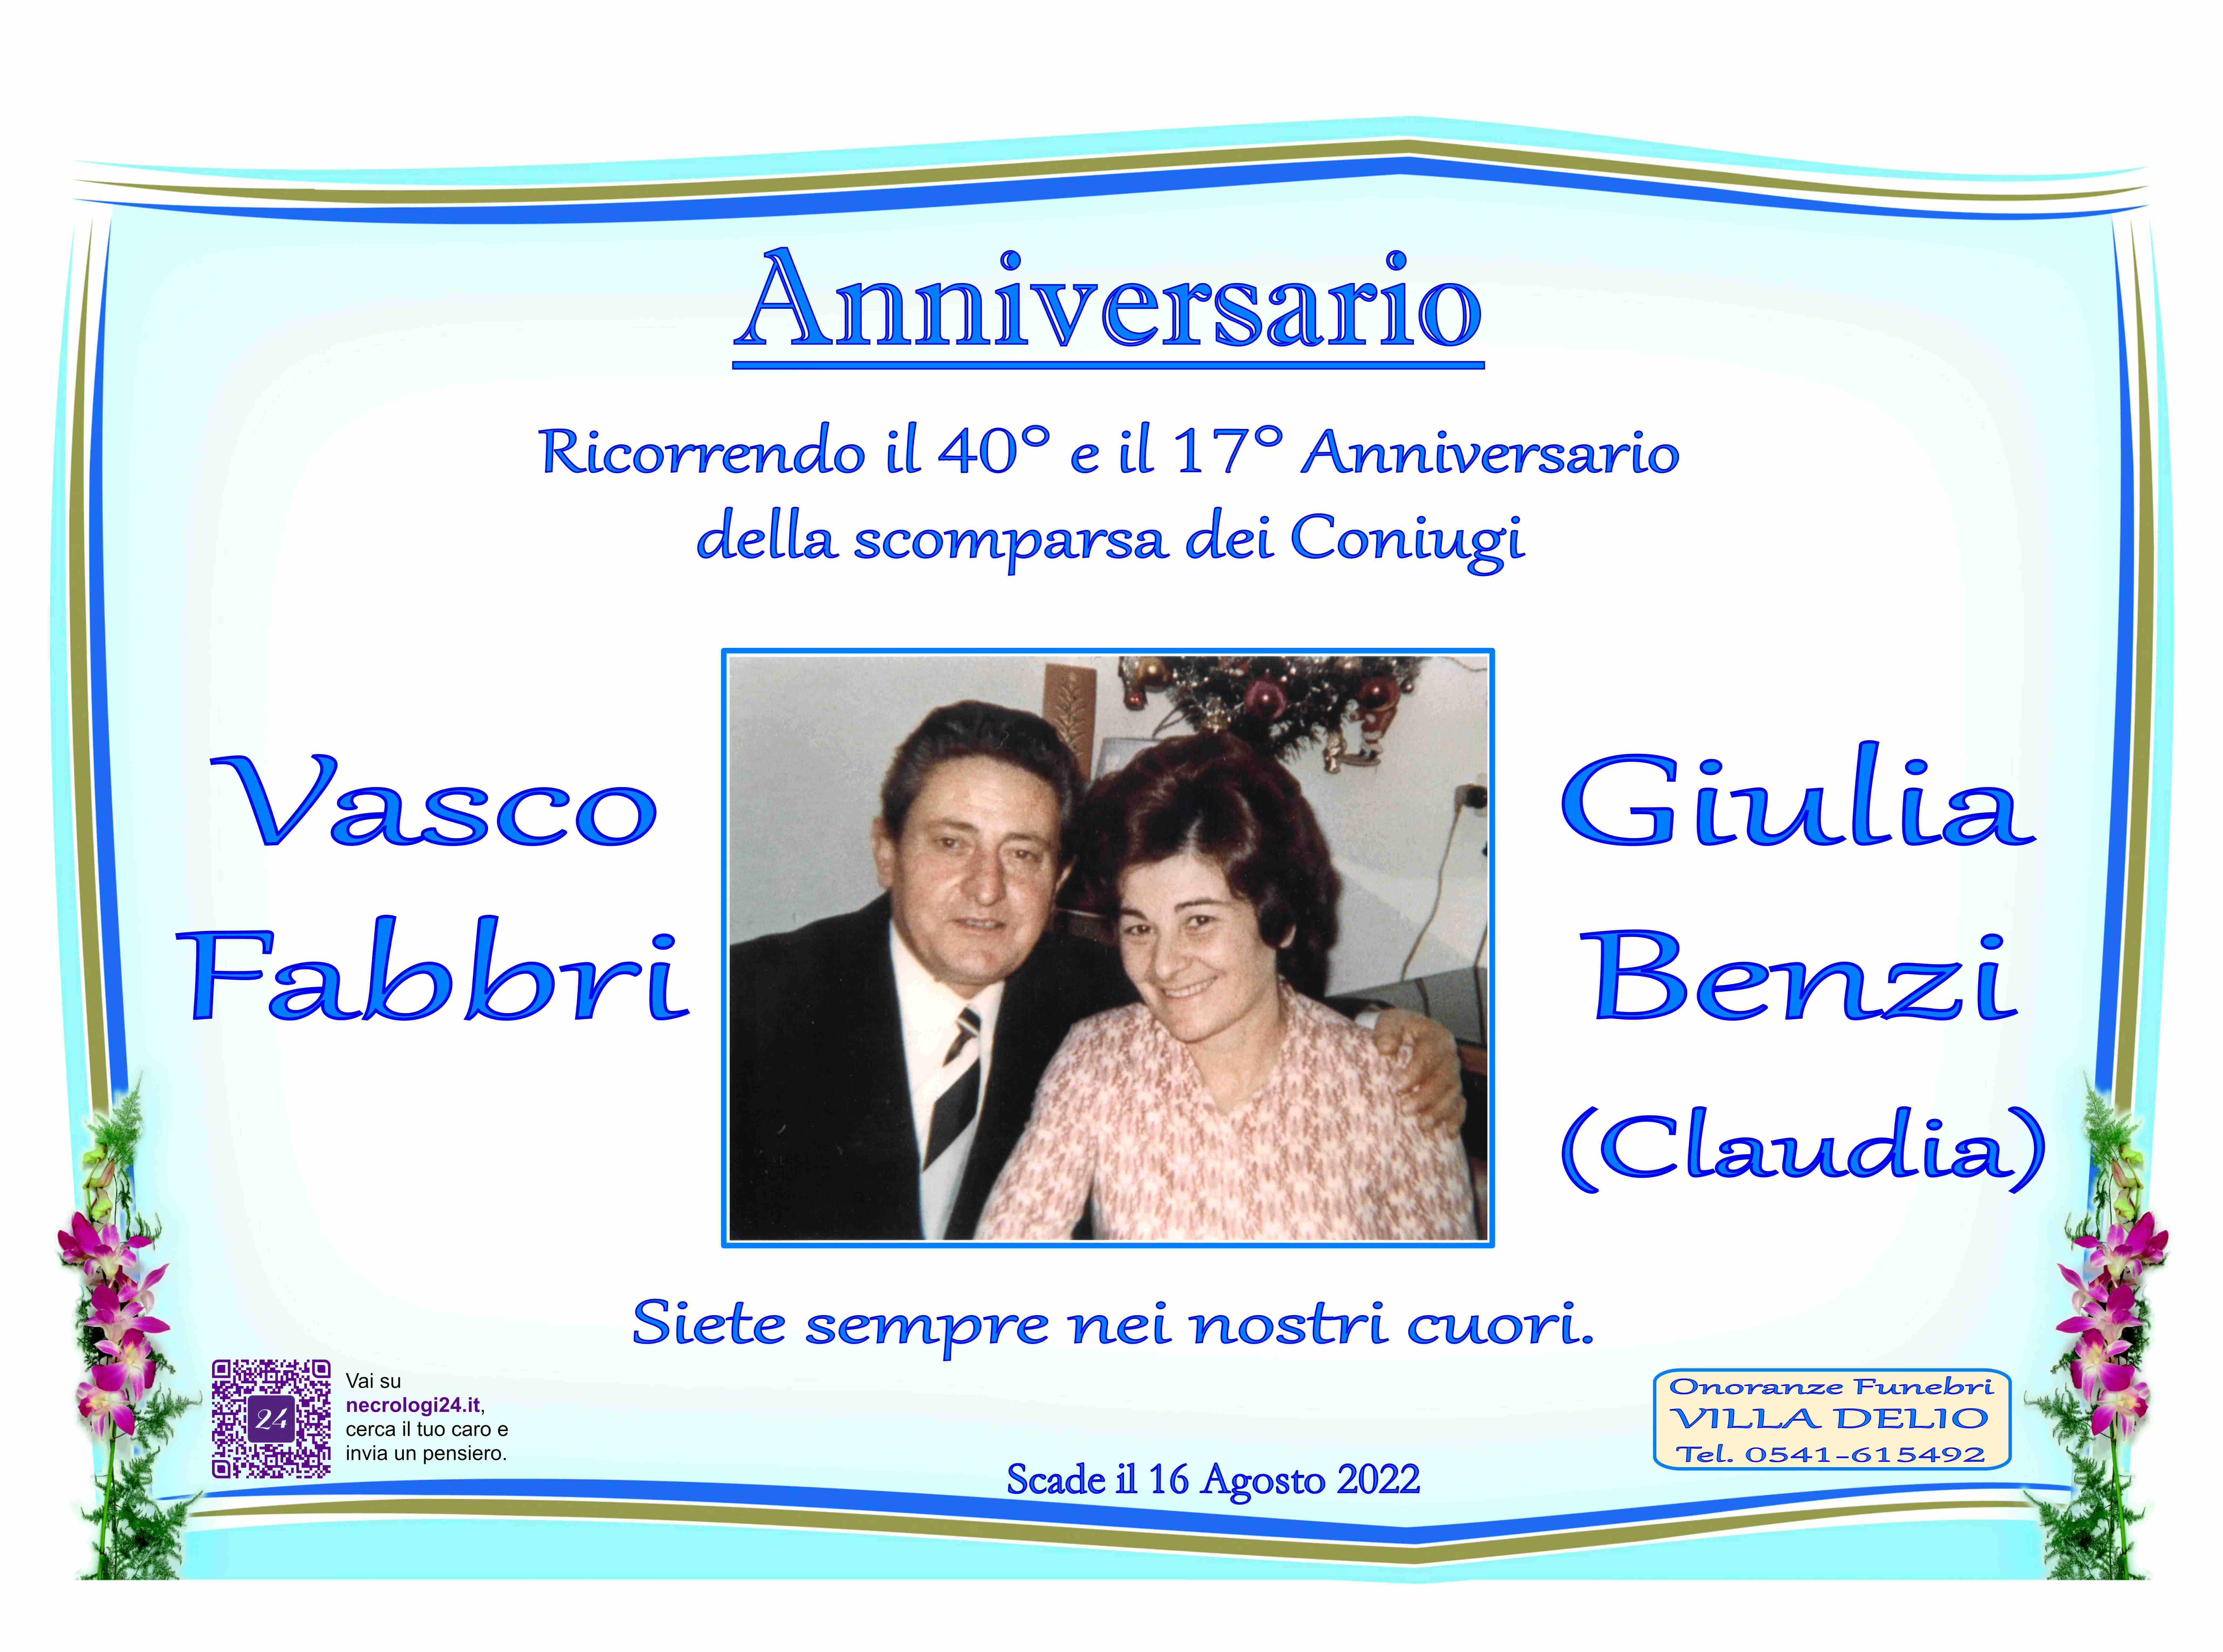 Vasco Fabbri e Giulia Benzi